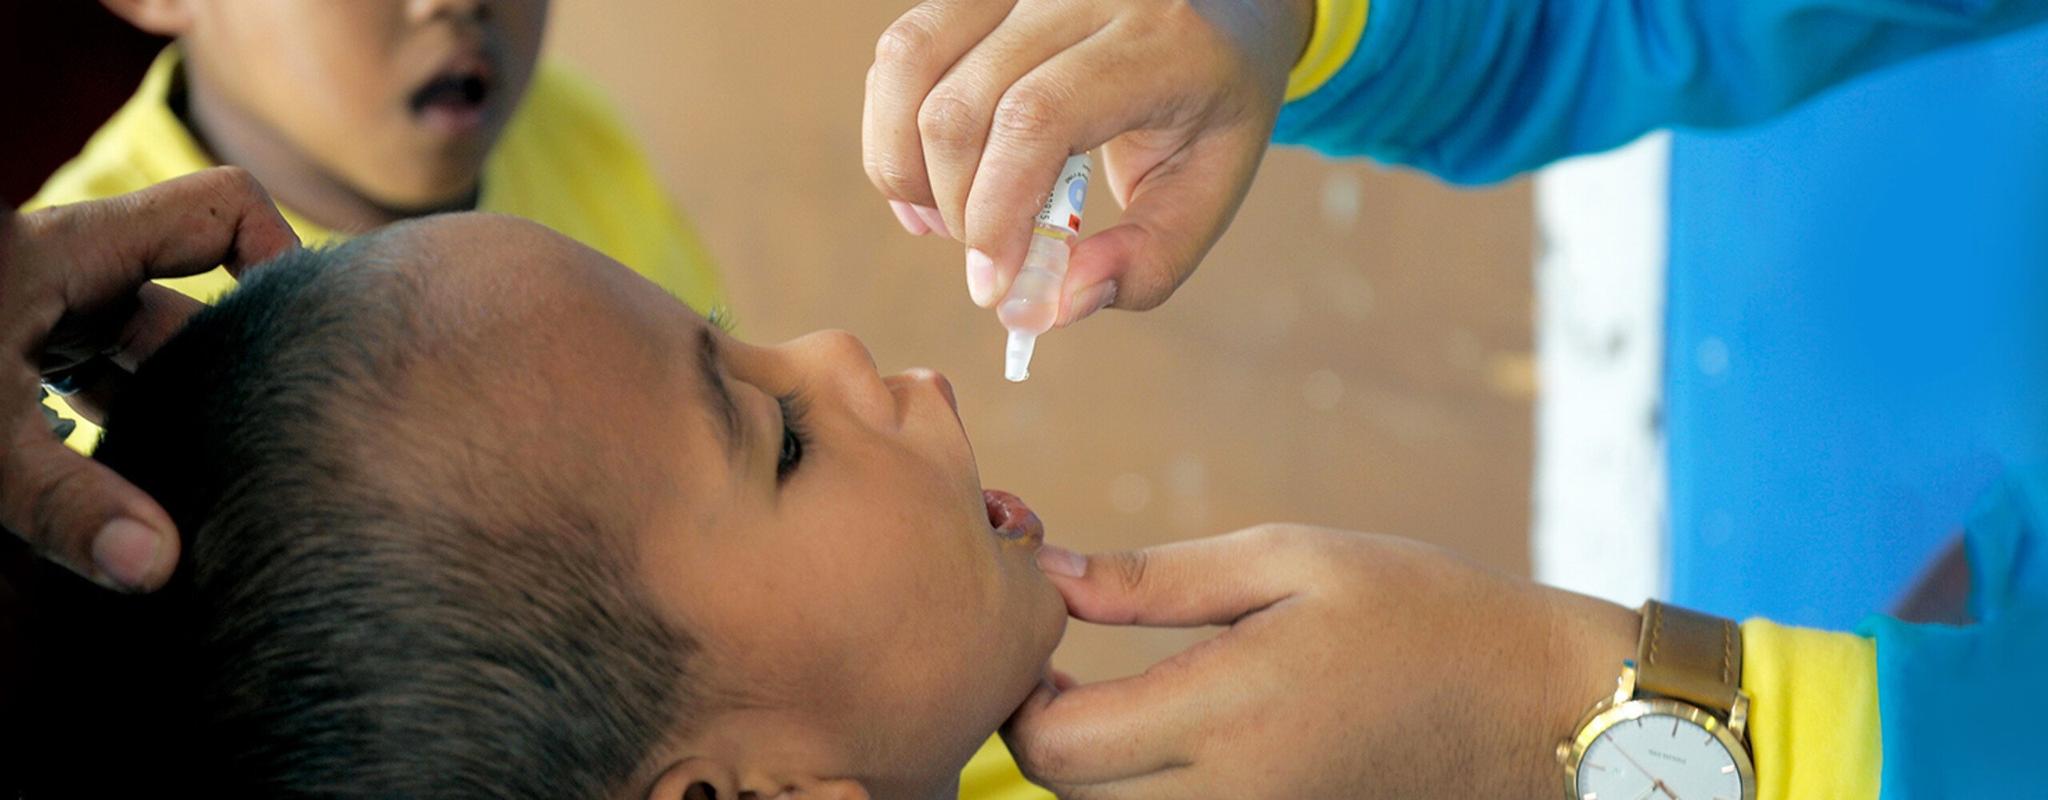 A child receiving oral polio drops 